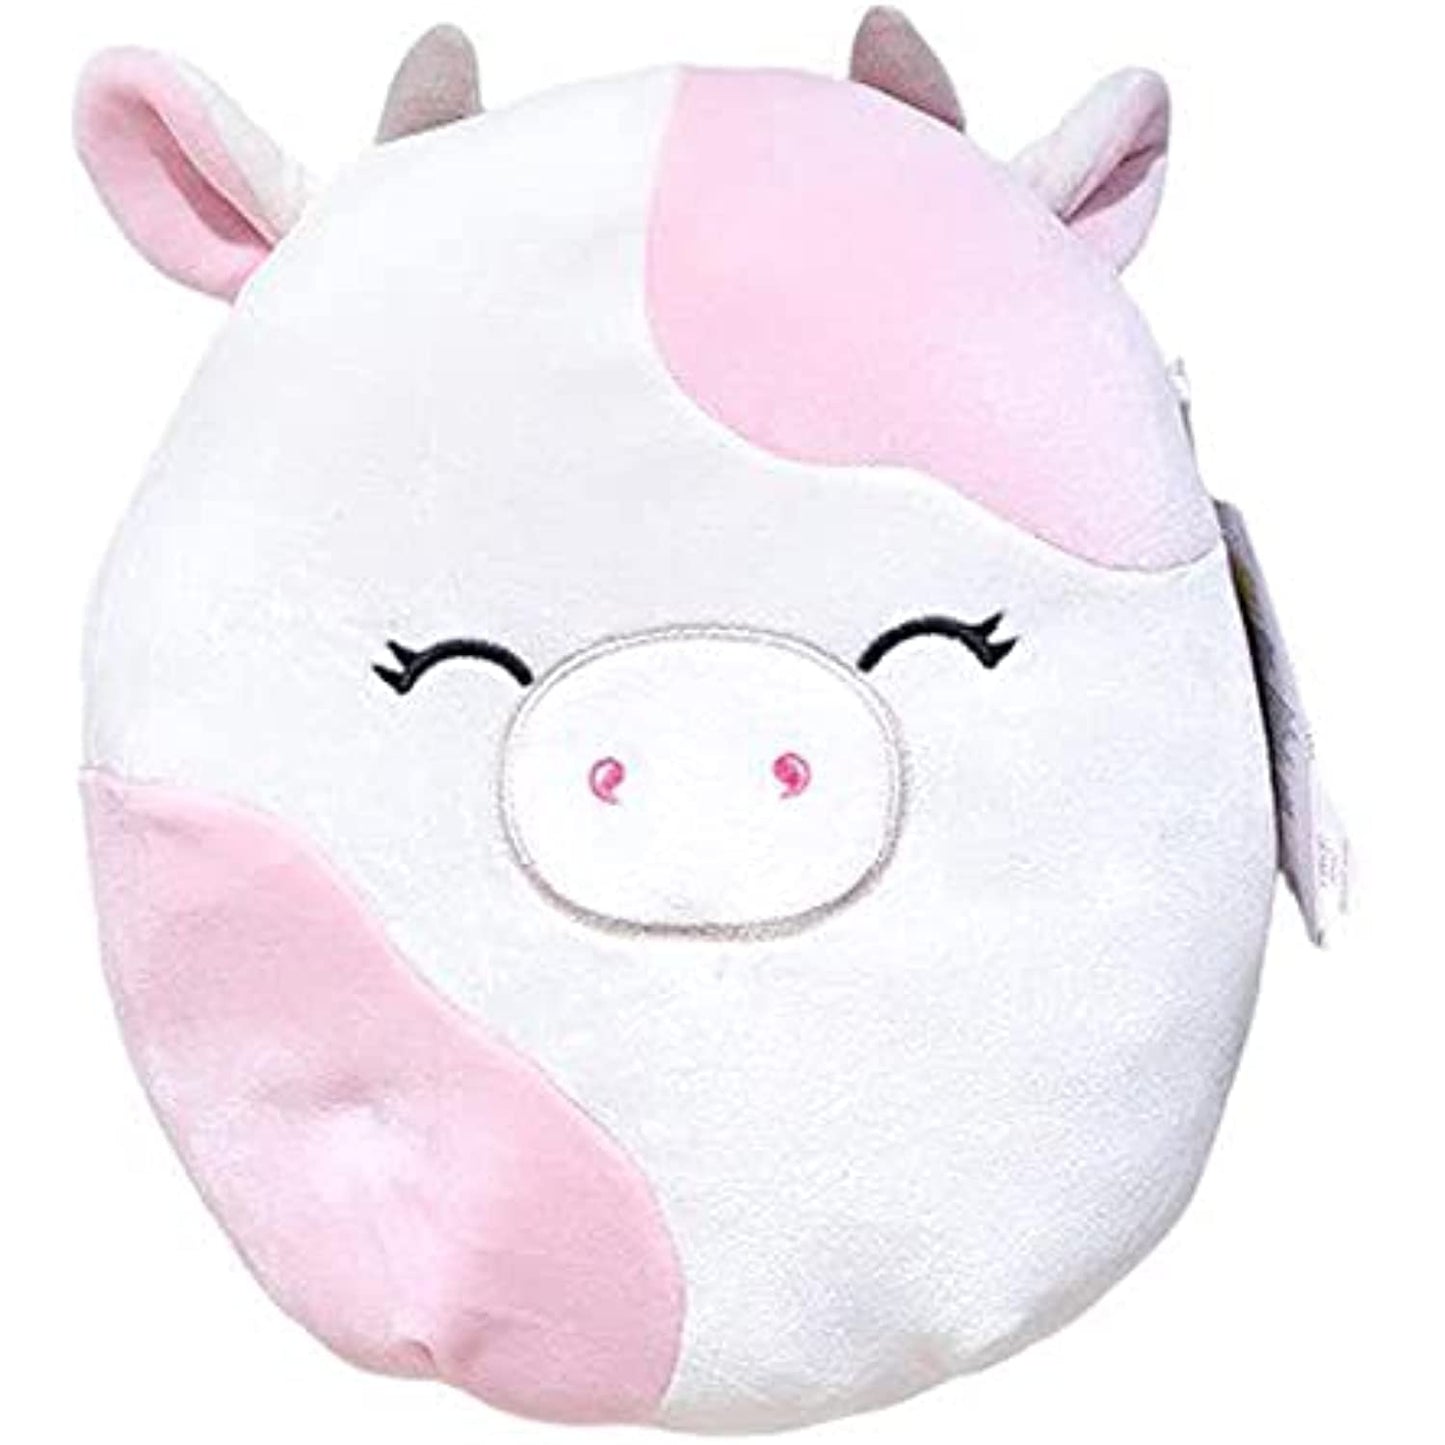 Squishmallows Caedyn the Sleepy Pink Cow 10" Plush Stuffed Animal